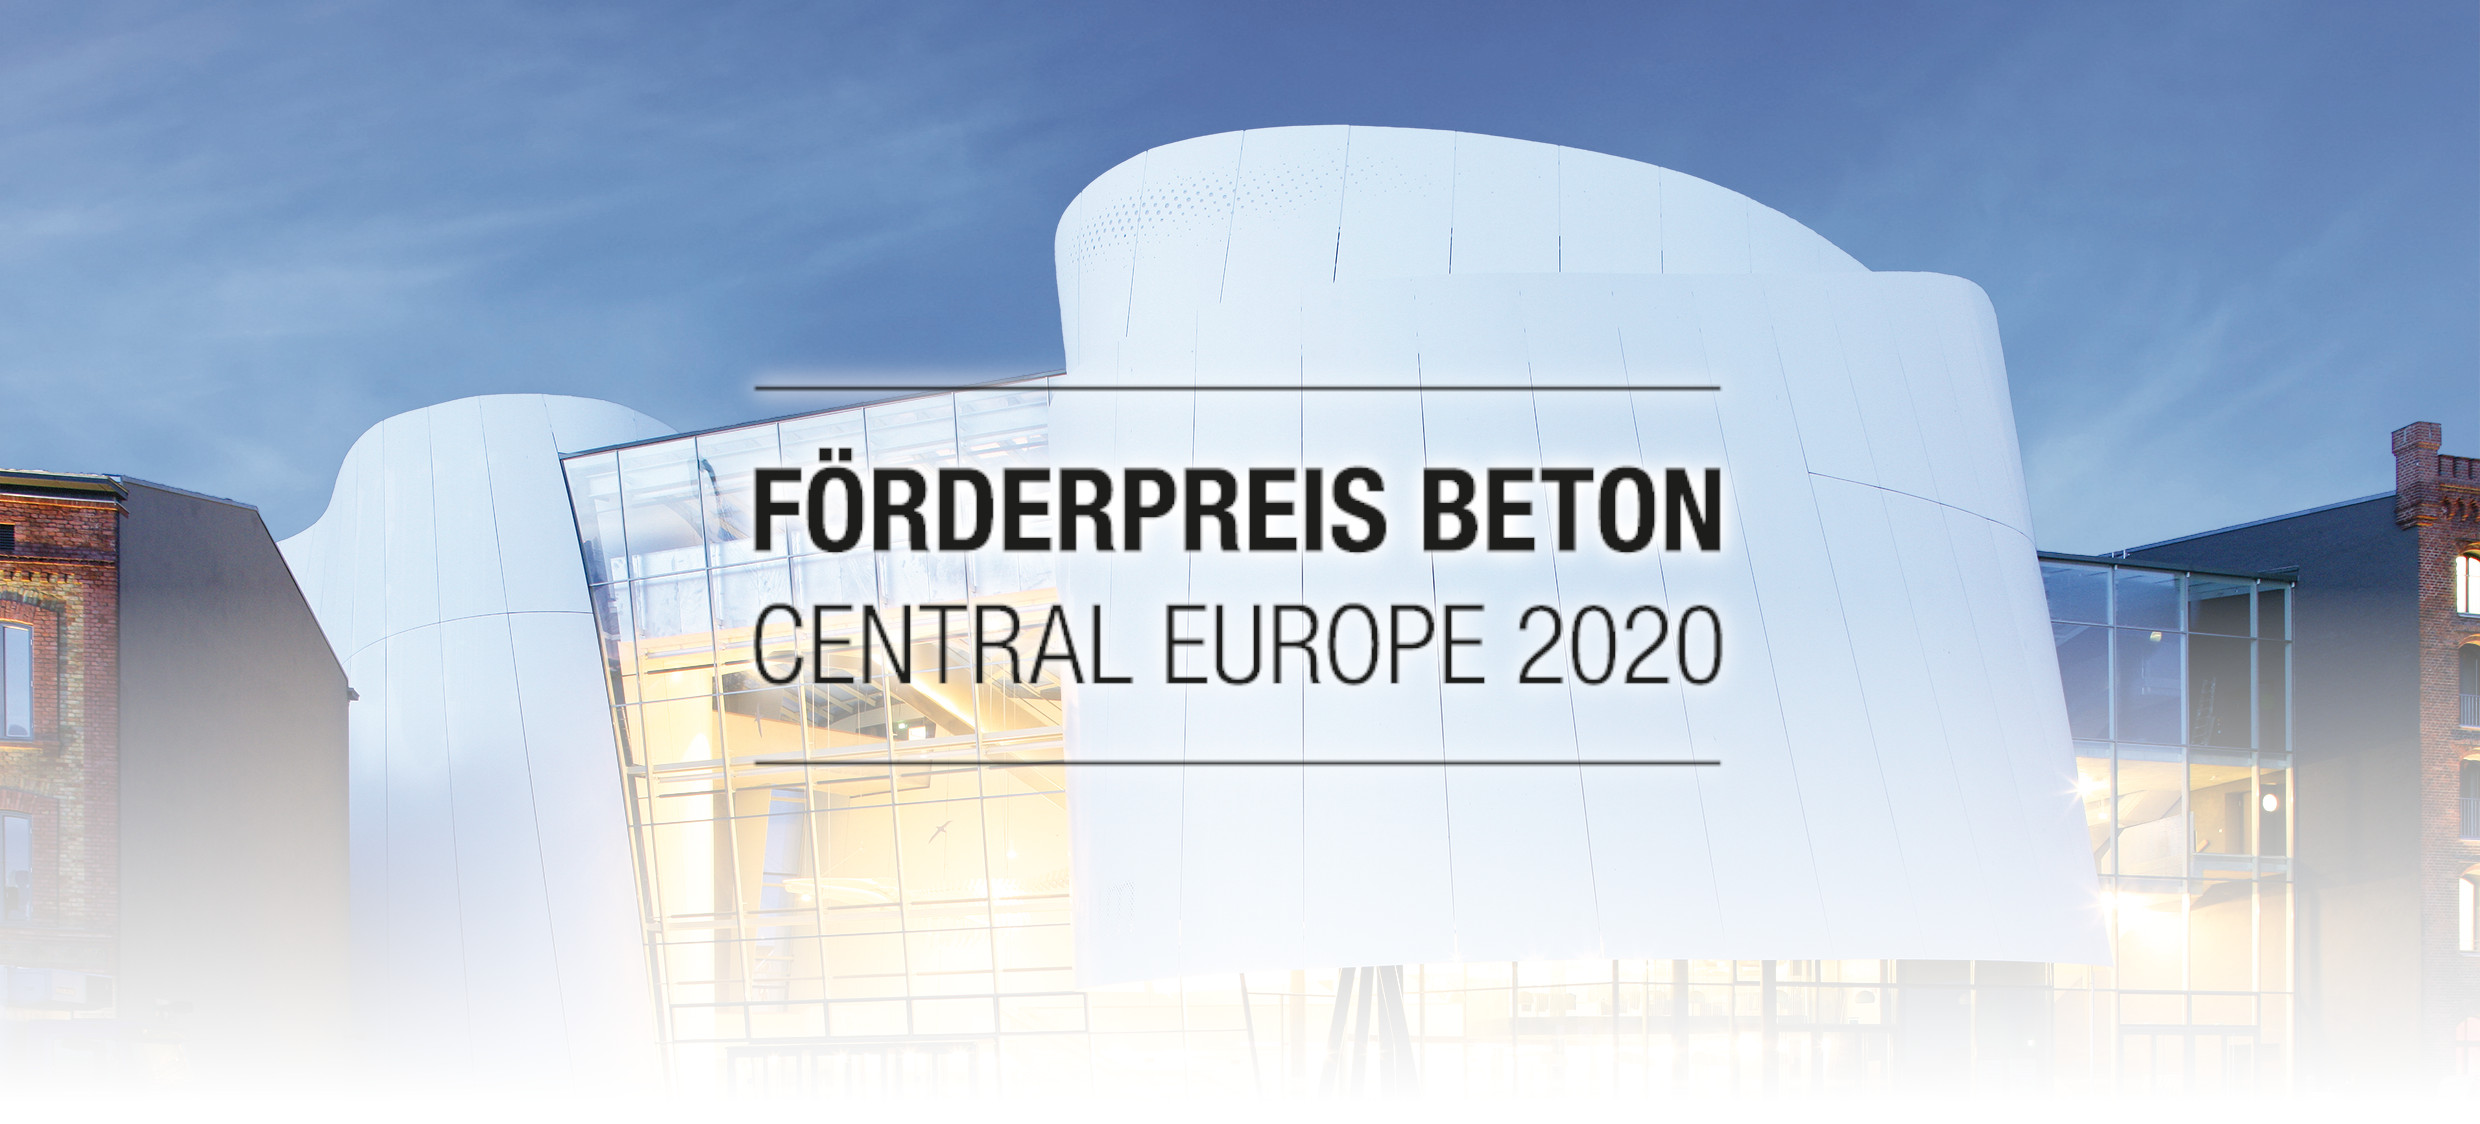 Forderpreis Beton Central Europe 2020 | CEMEX CZ